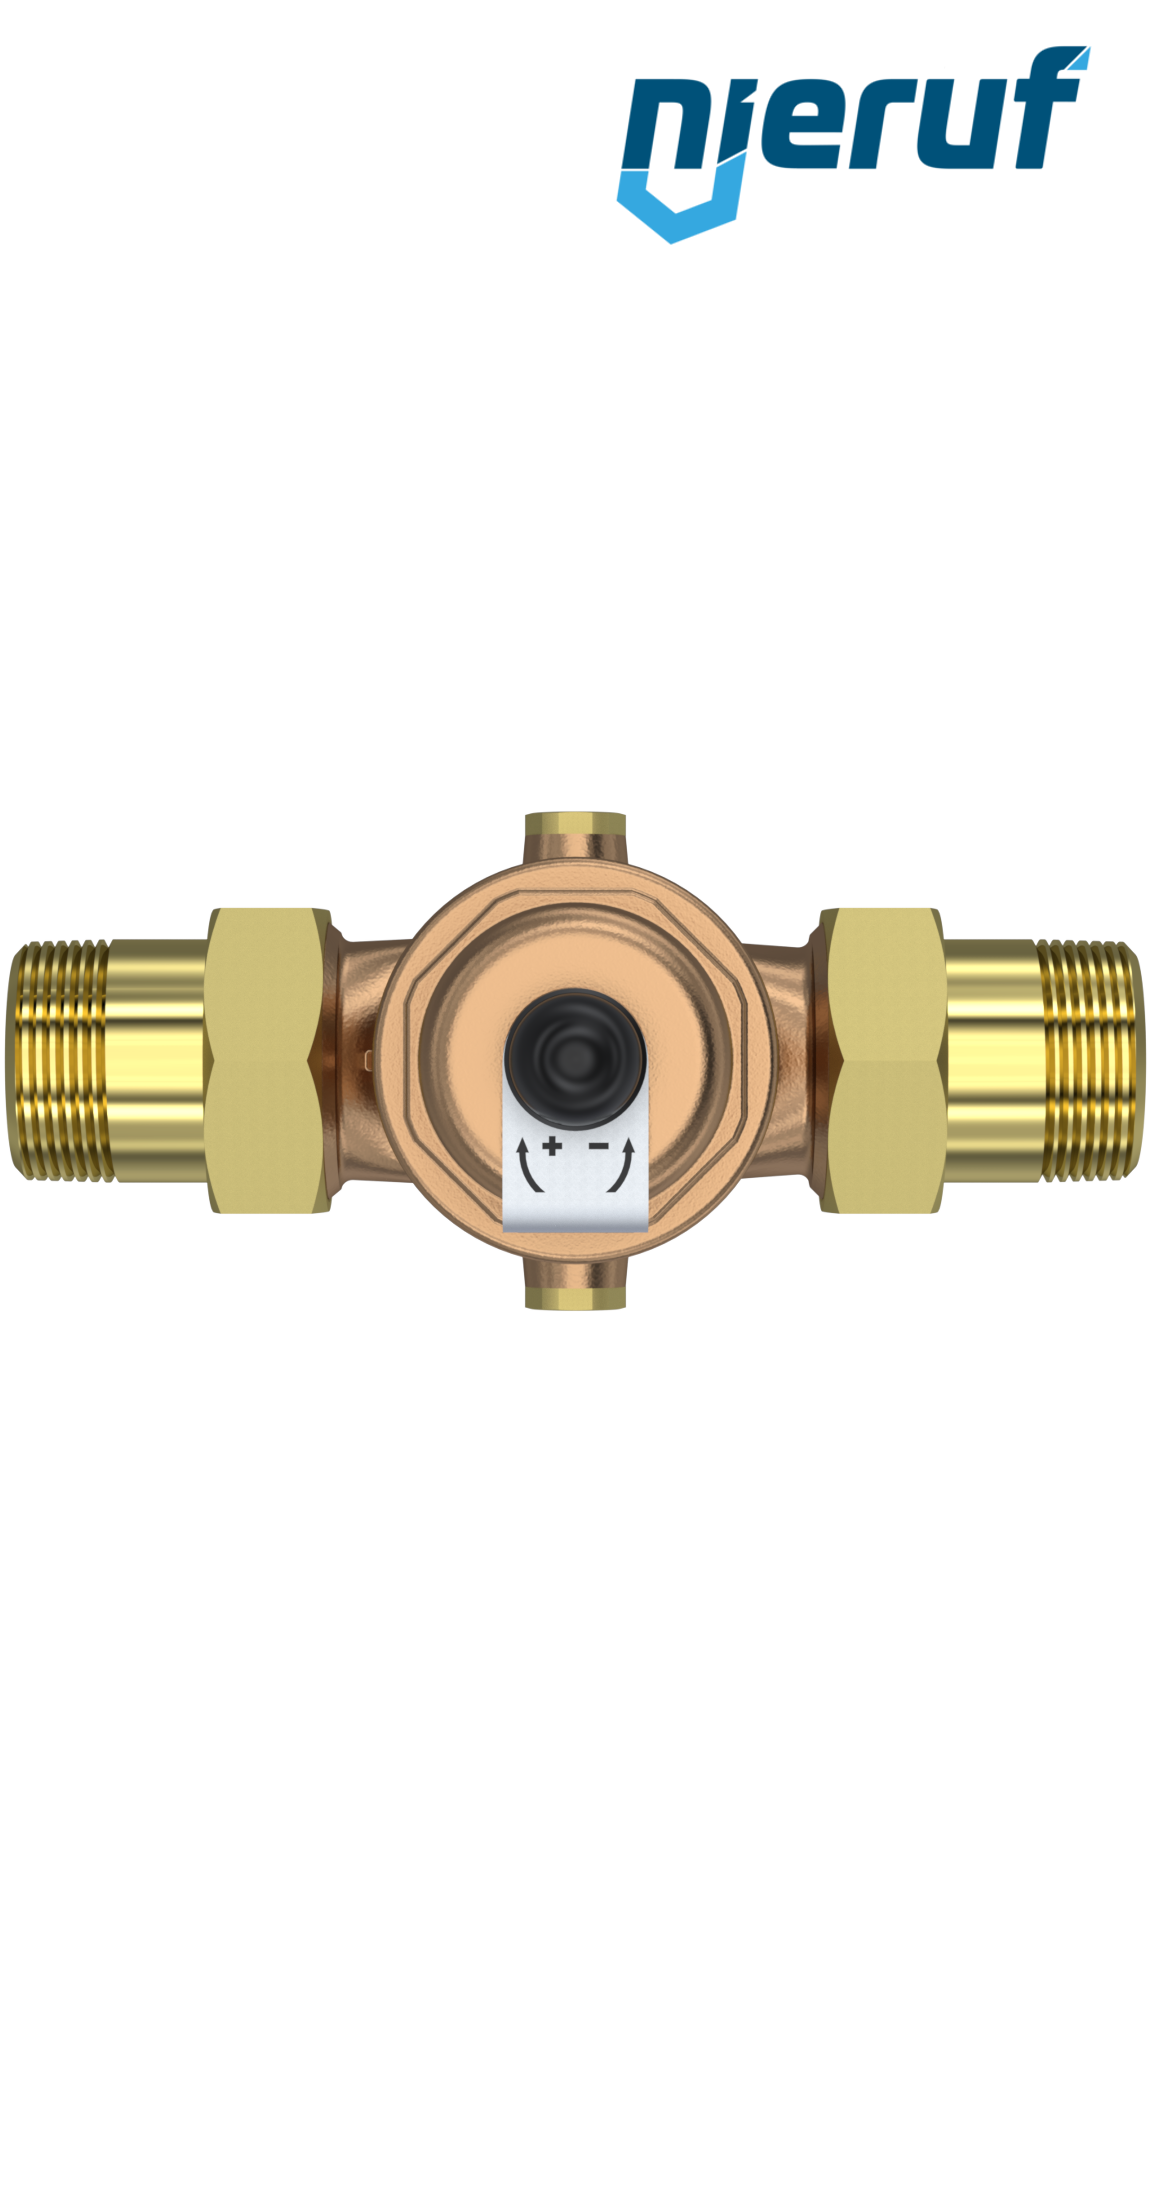 pressure reducing valve 1 1/4" inch male thread DM02 gunmetal FKM 5.0 - 15.0 bar